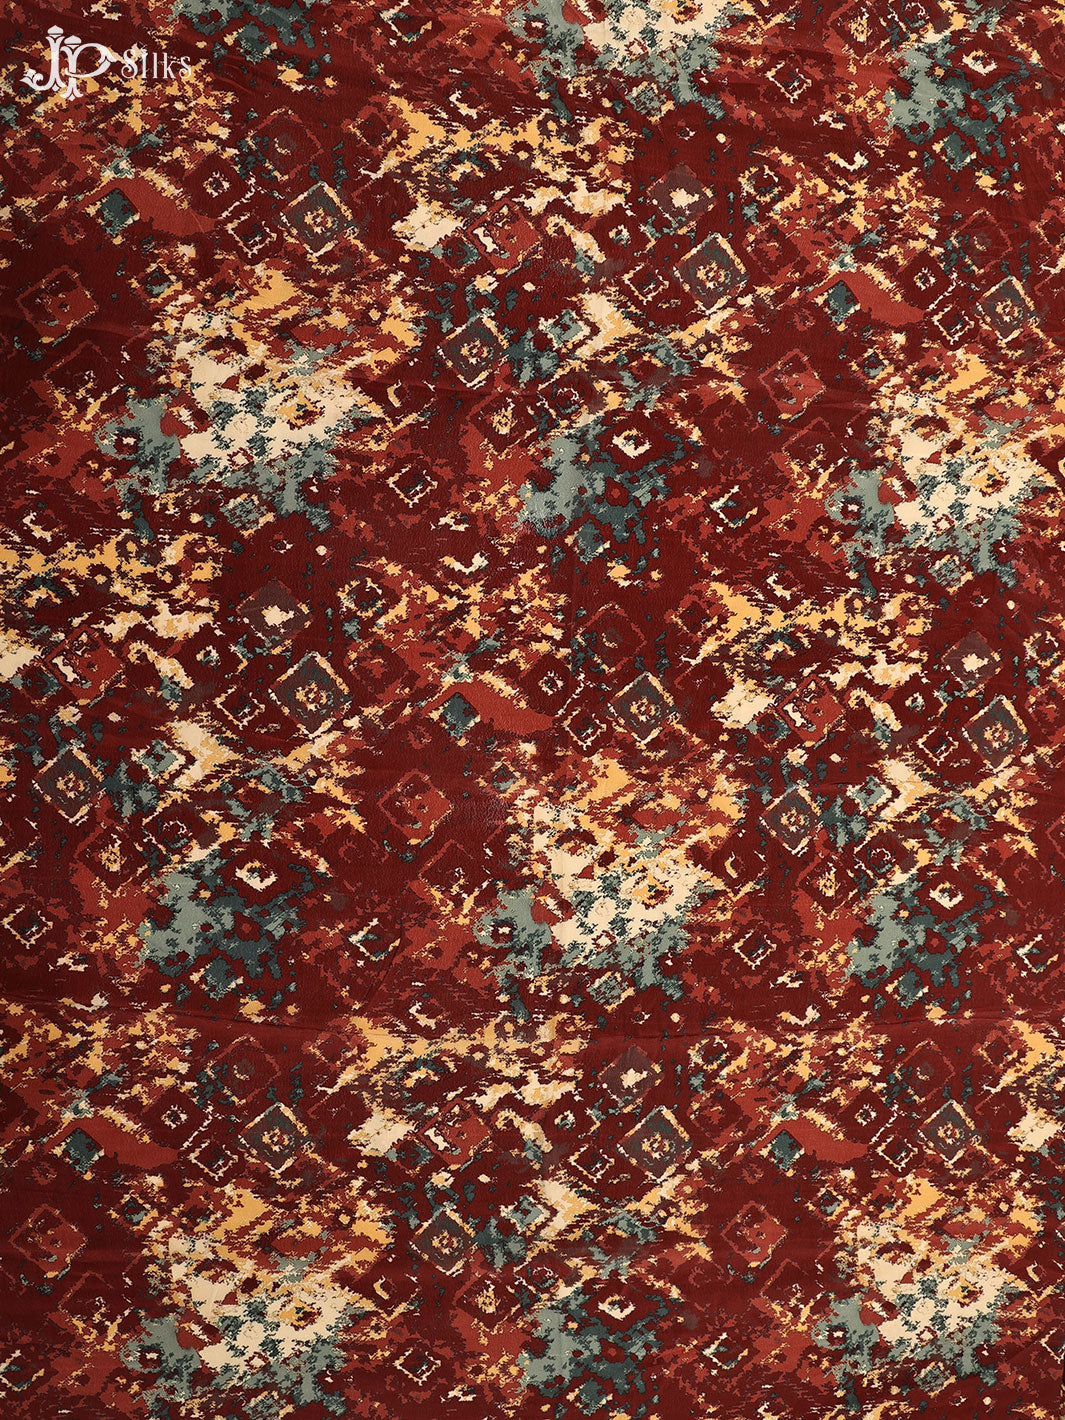 Maroon Digital Printed Viscose Crepe Fabric - E4010 - View 2